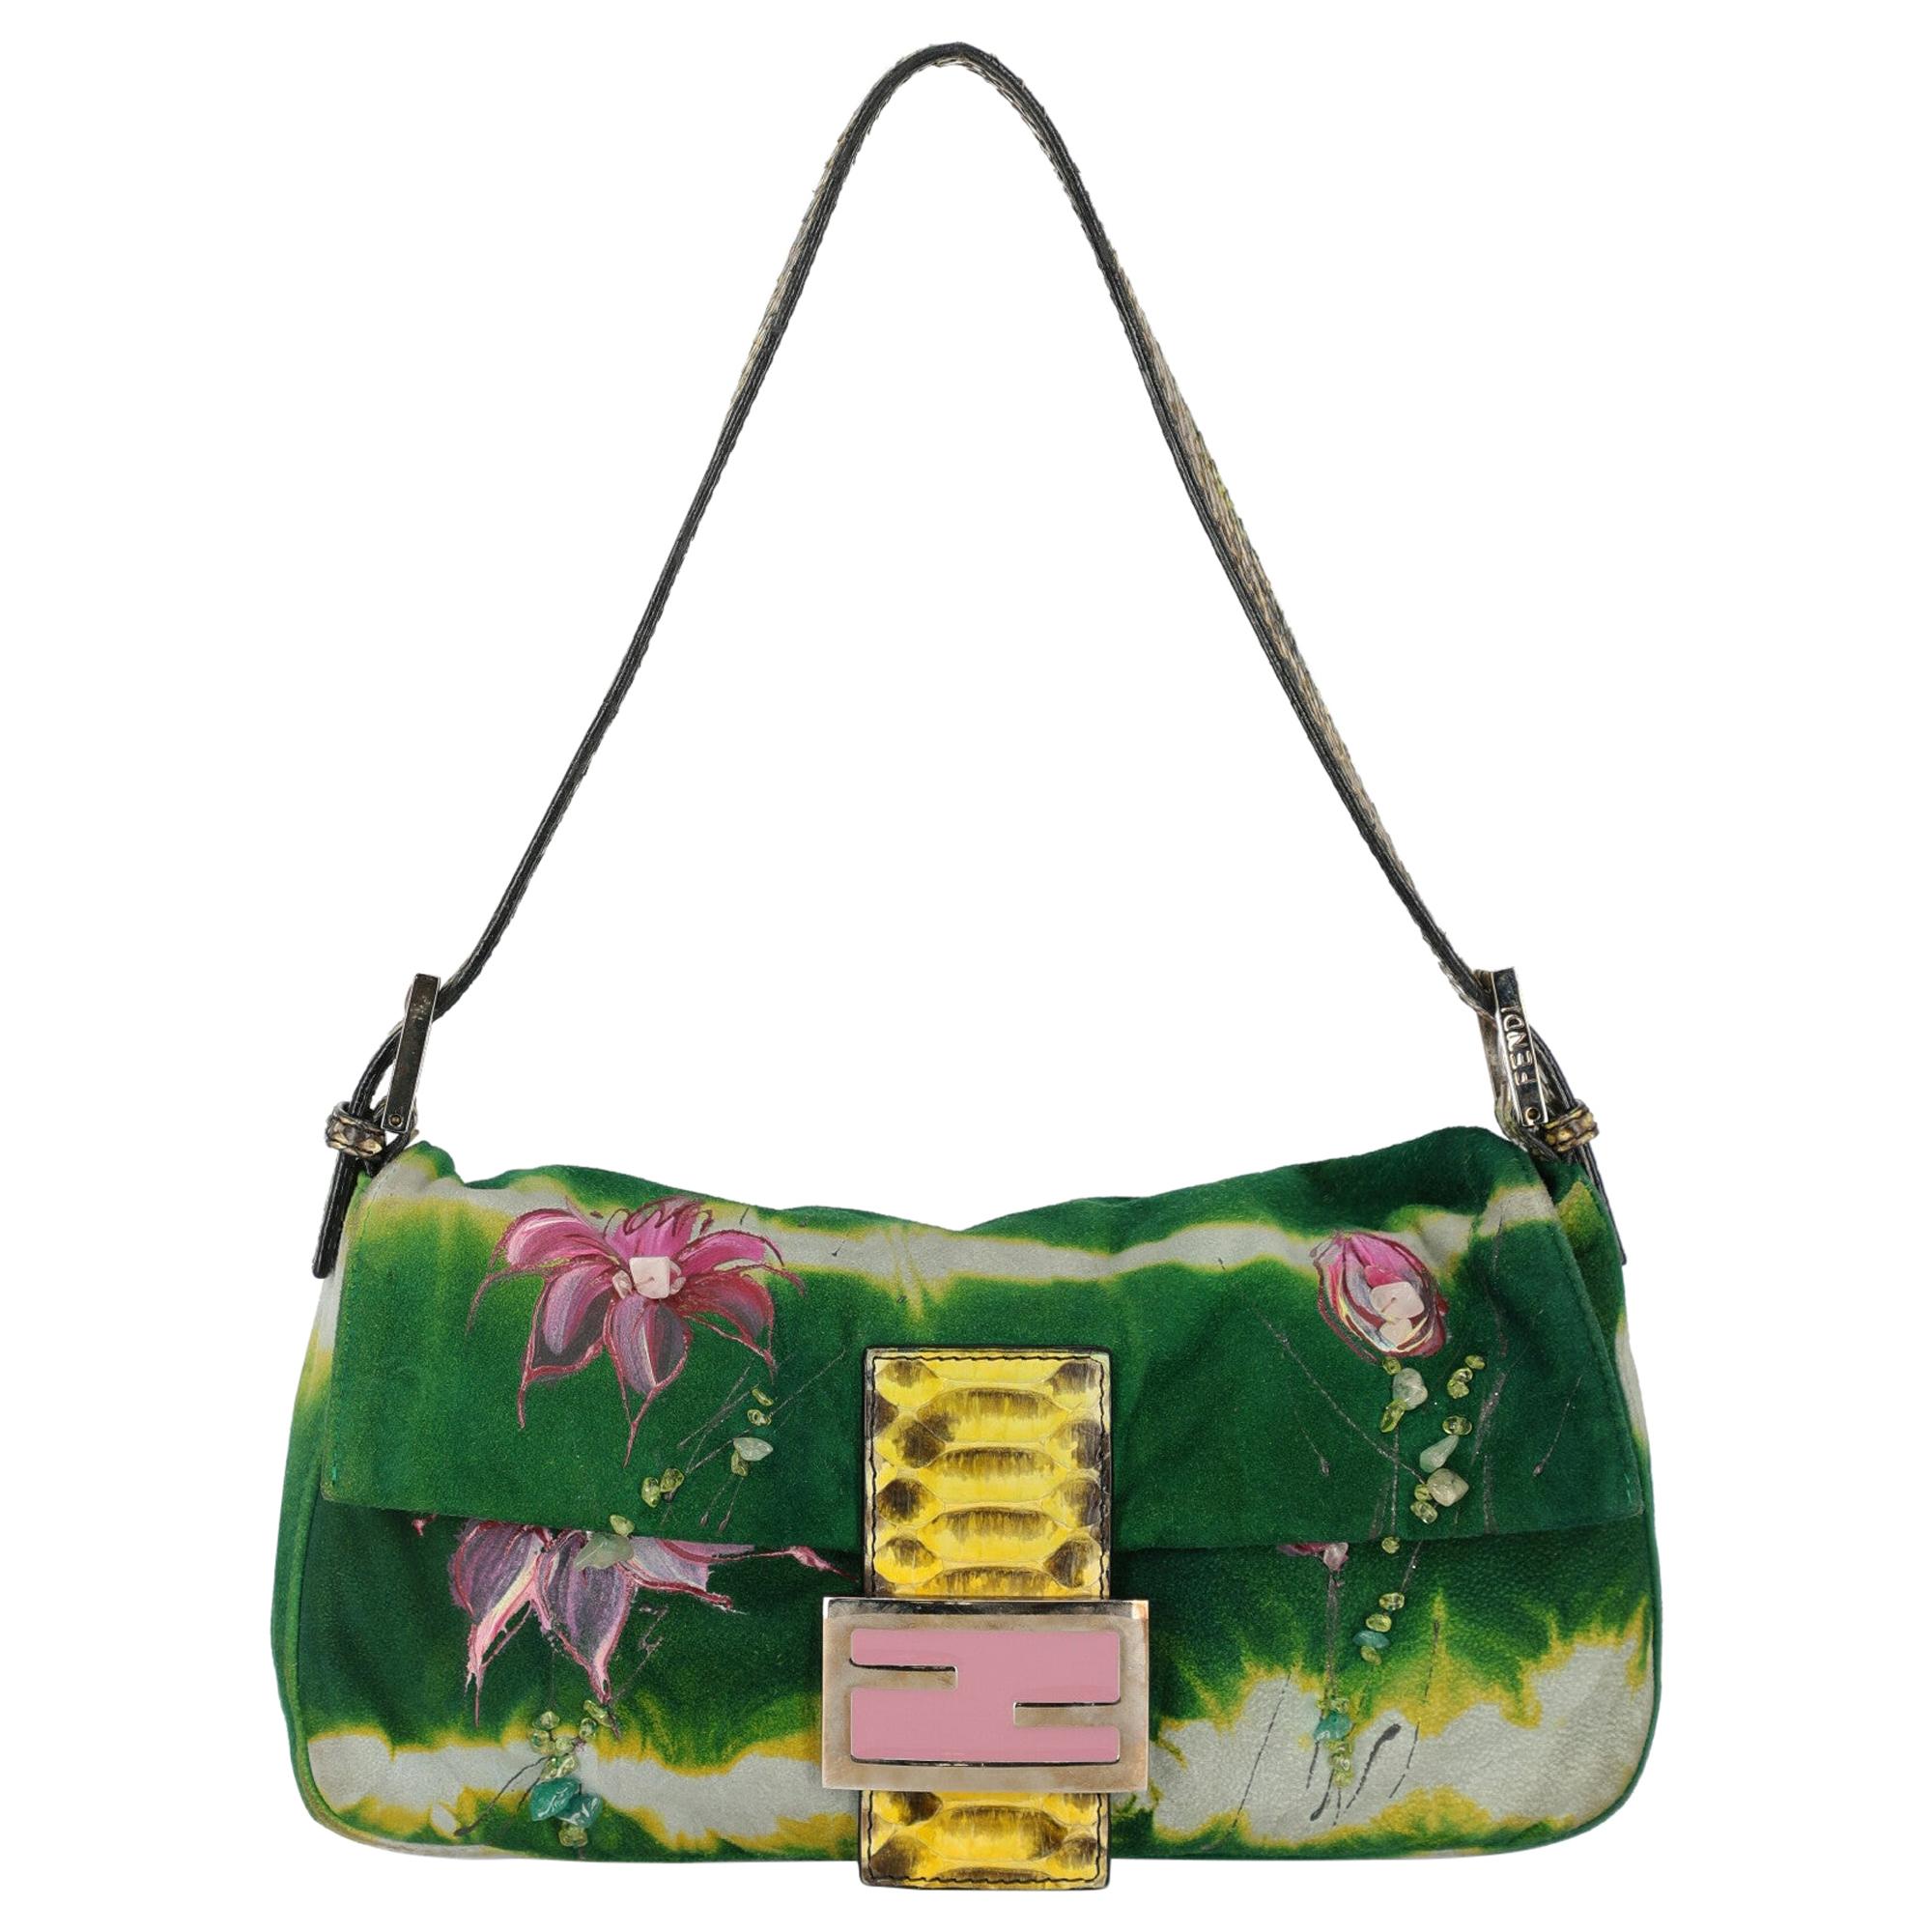 Fendi women's Handbag Baguette Green/Pink Leather For Sale